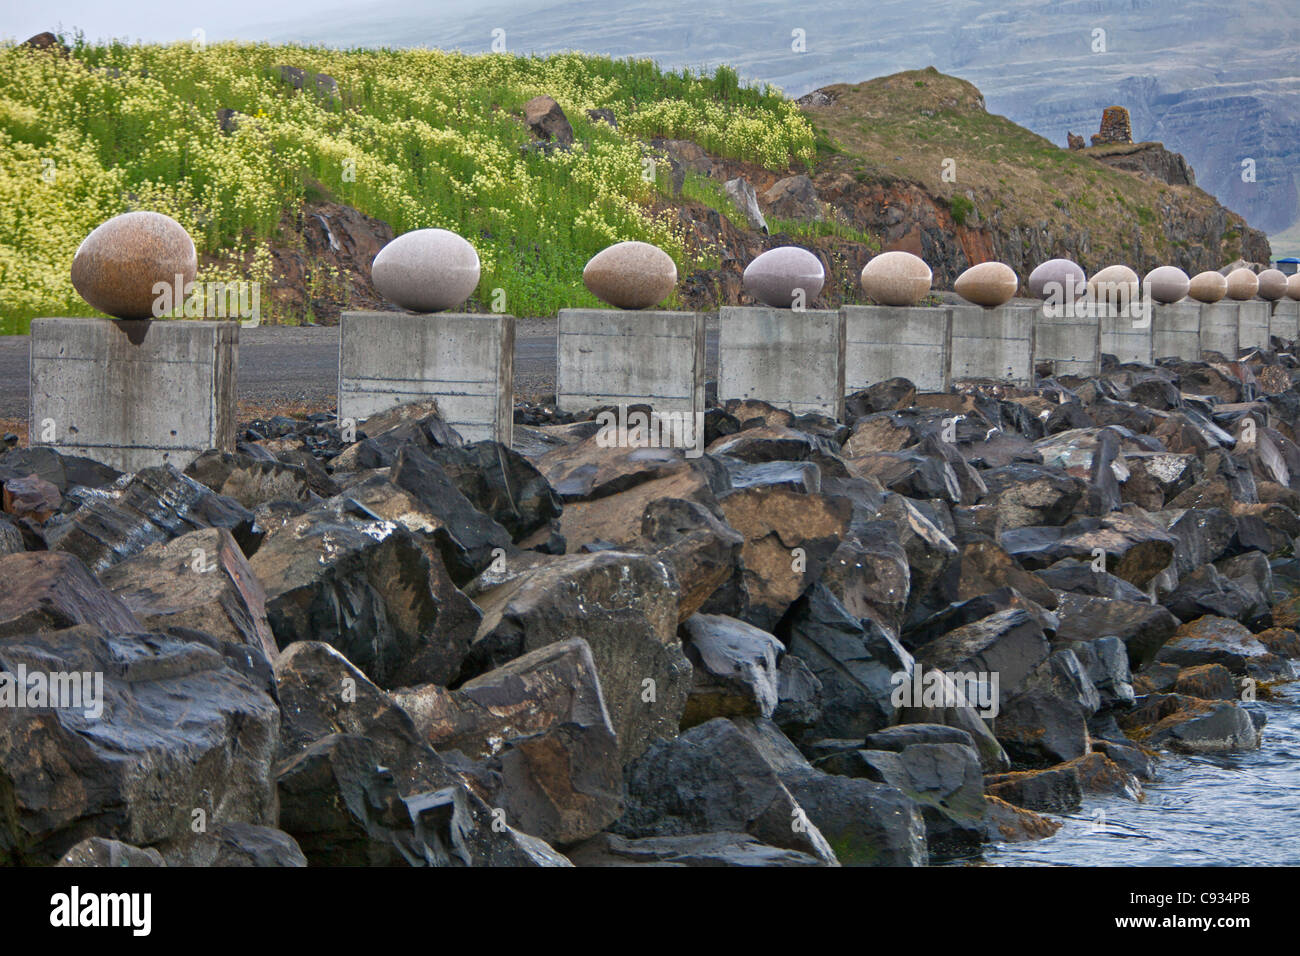 Large stone eggs on plinths lining the fishing harbour at Djupivogur. Stock Photo